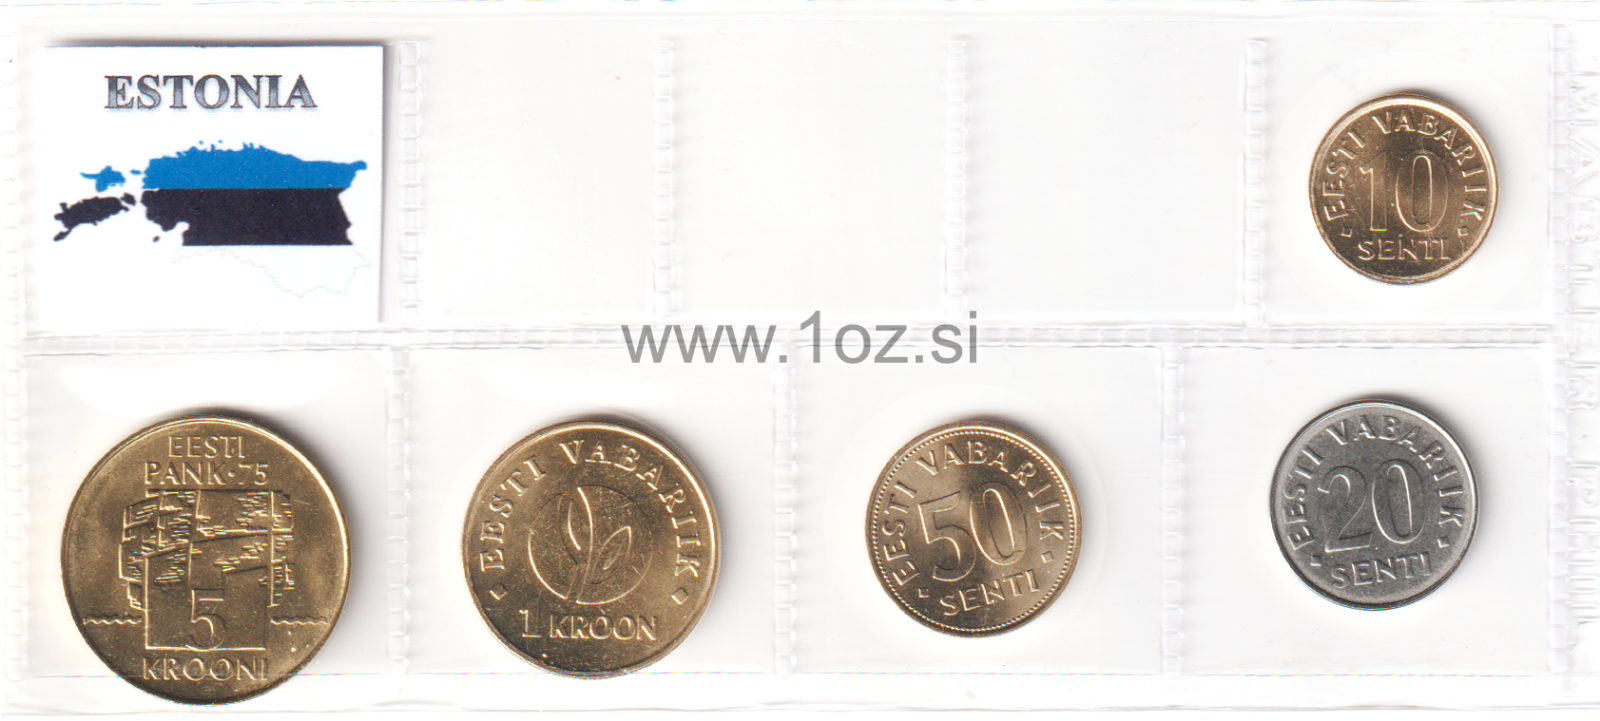 ESTONIA SET 1994 / 2008 - 5 coins (10, 20, 50 SENTI + 1, 5 KROONI) UNCIRCULATED Без бренда